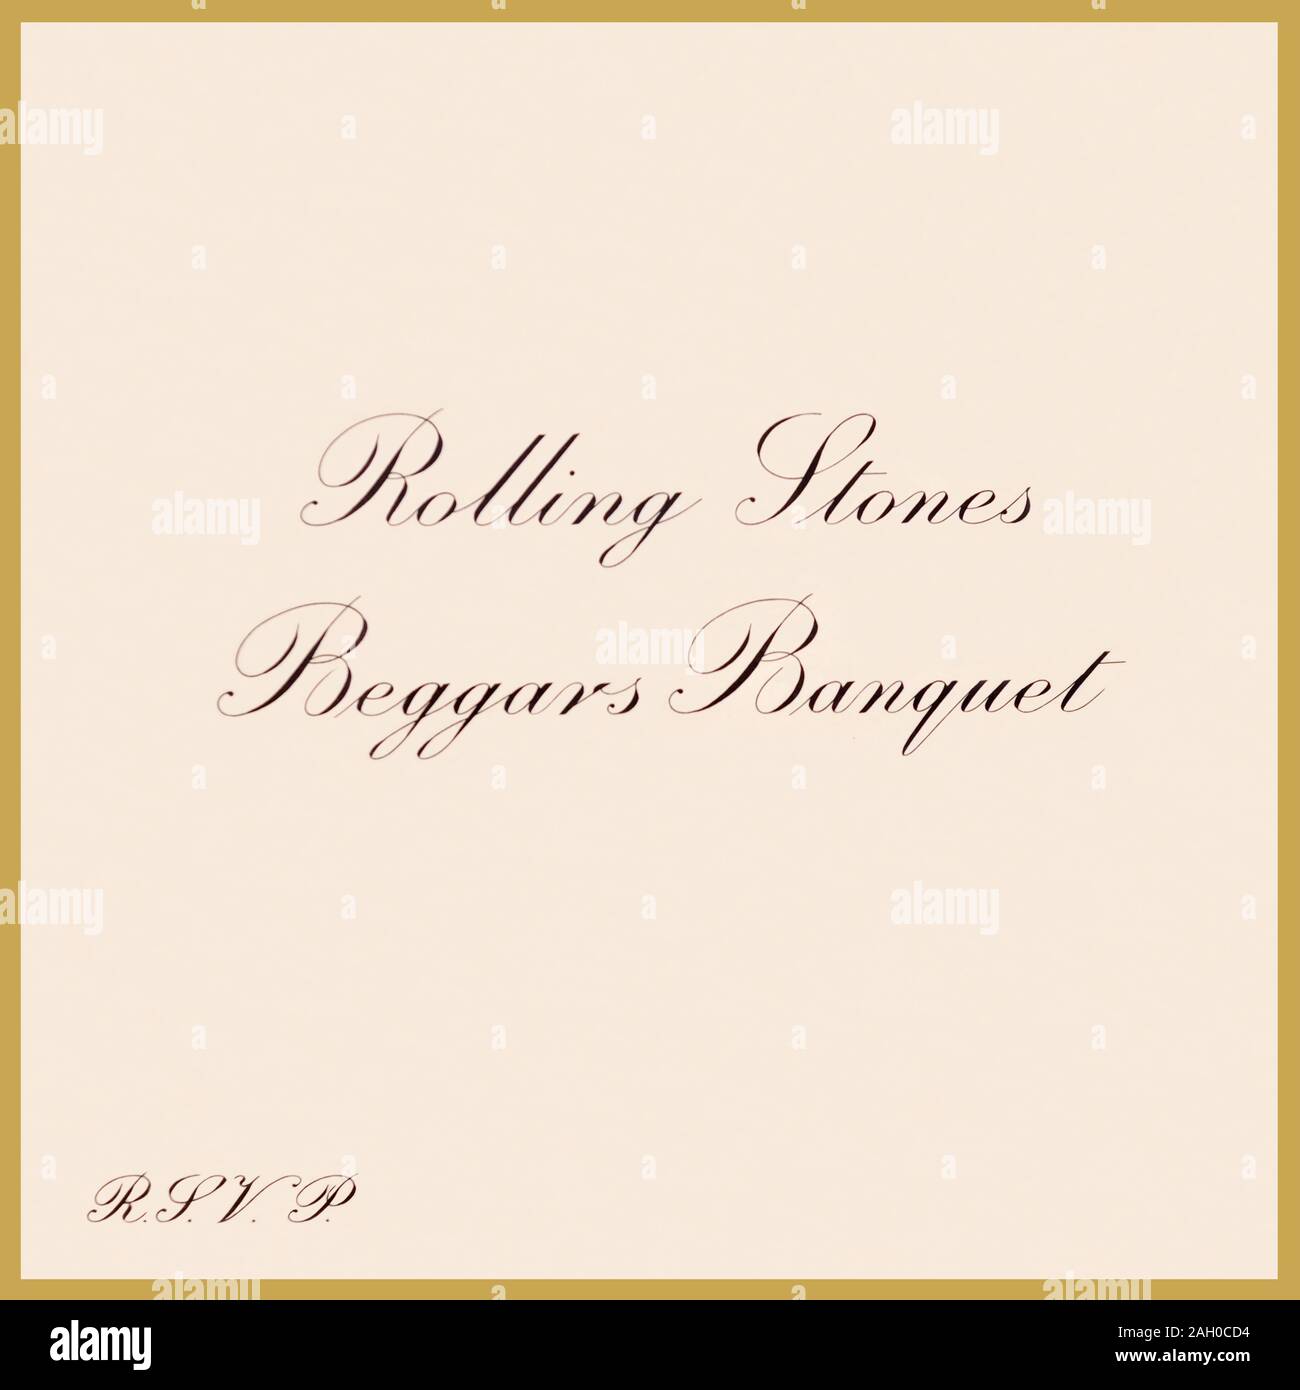 Rolling Stones - original vinyl album cover - Beggars Banquet - 1968 Stock Photo